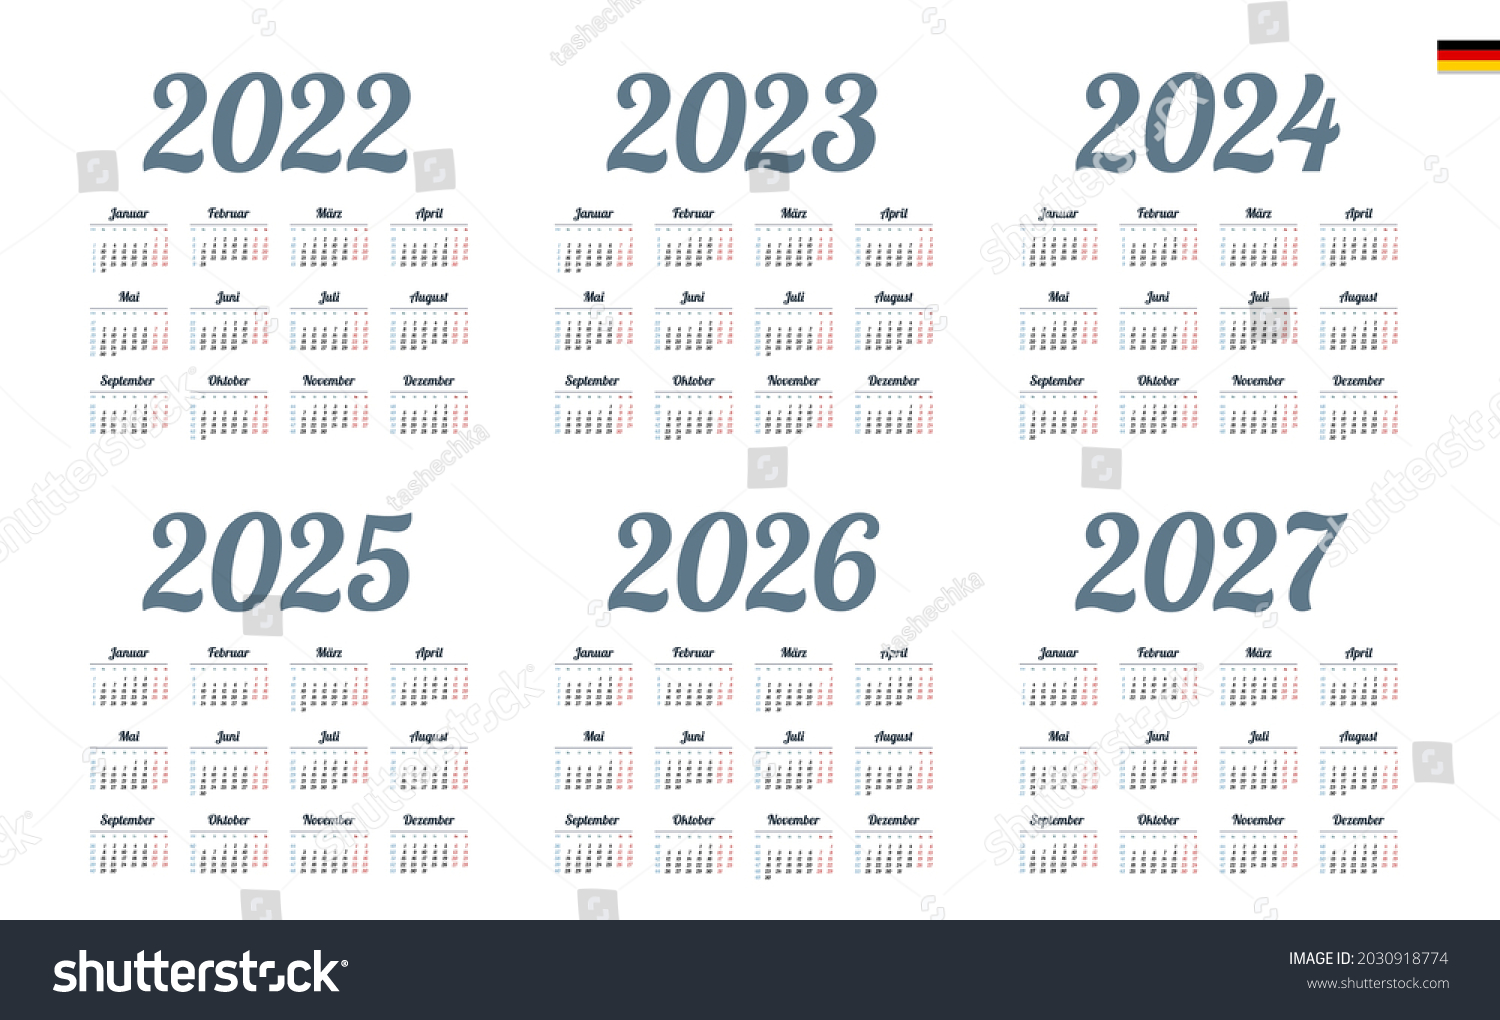 german-calendar-2022-2023-2024-2025-stock-vektor-royaltyfri-2030918774-shutterstock